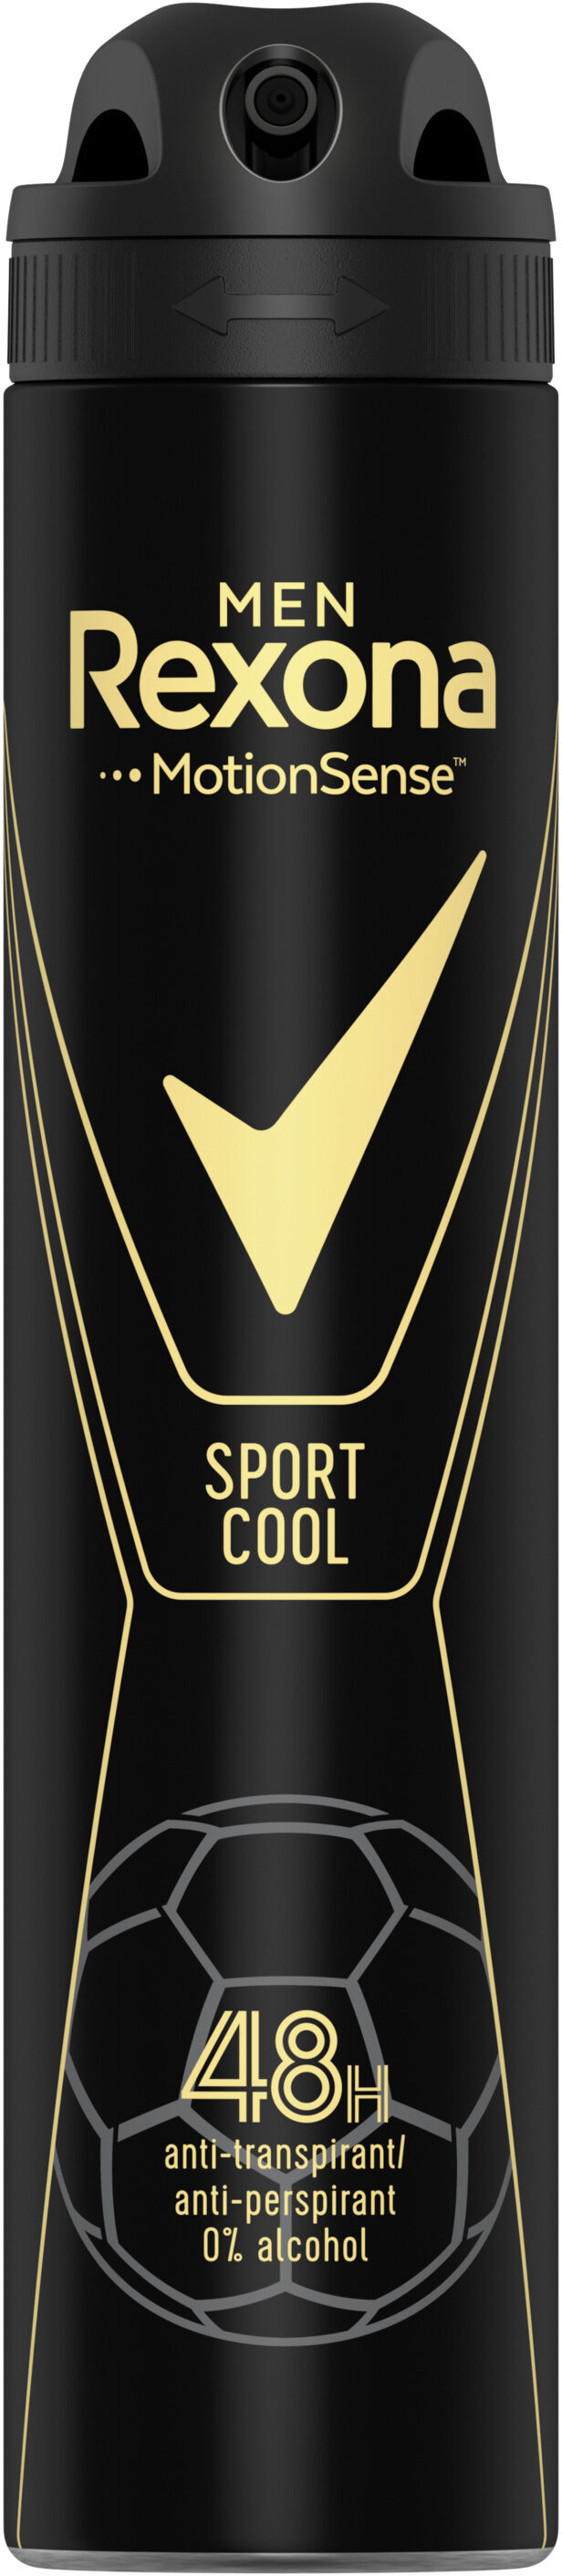 REXONA MEN Déodorant Homme Spray Anti-Transpirant Sport Cool 200ml - Produkt - fr